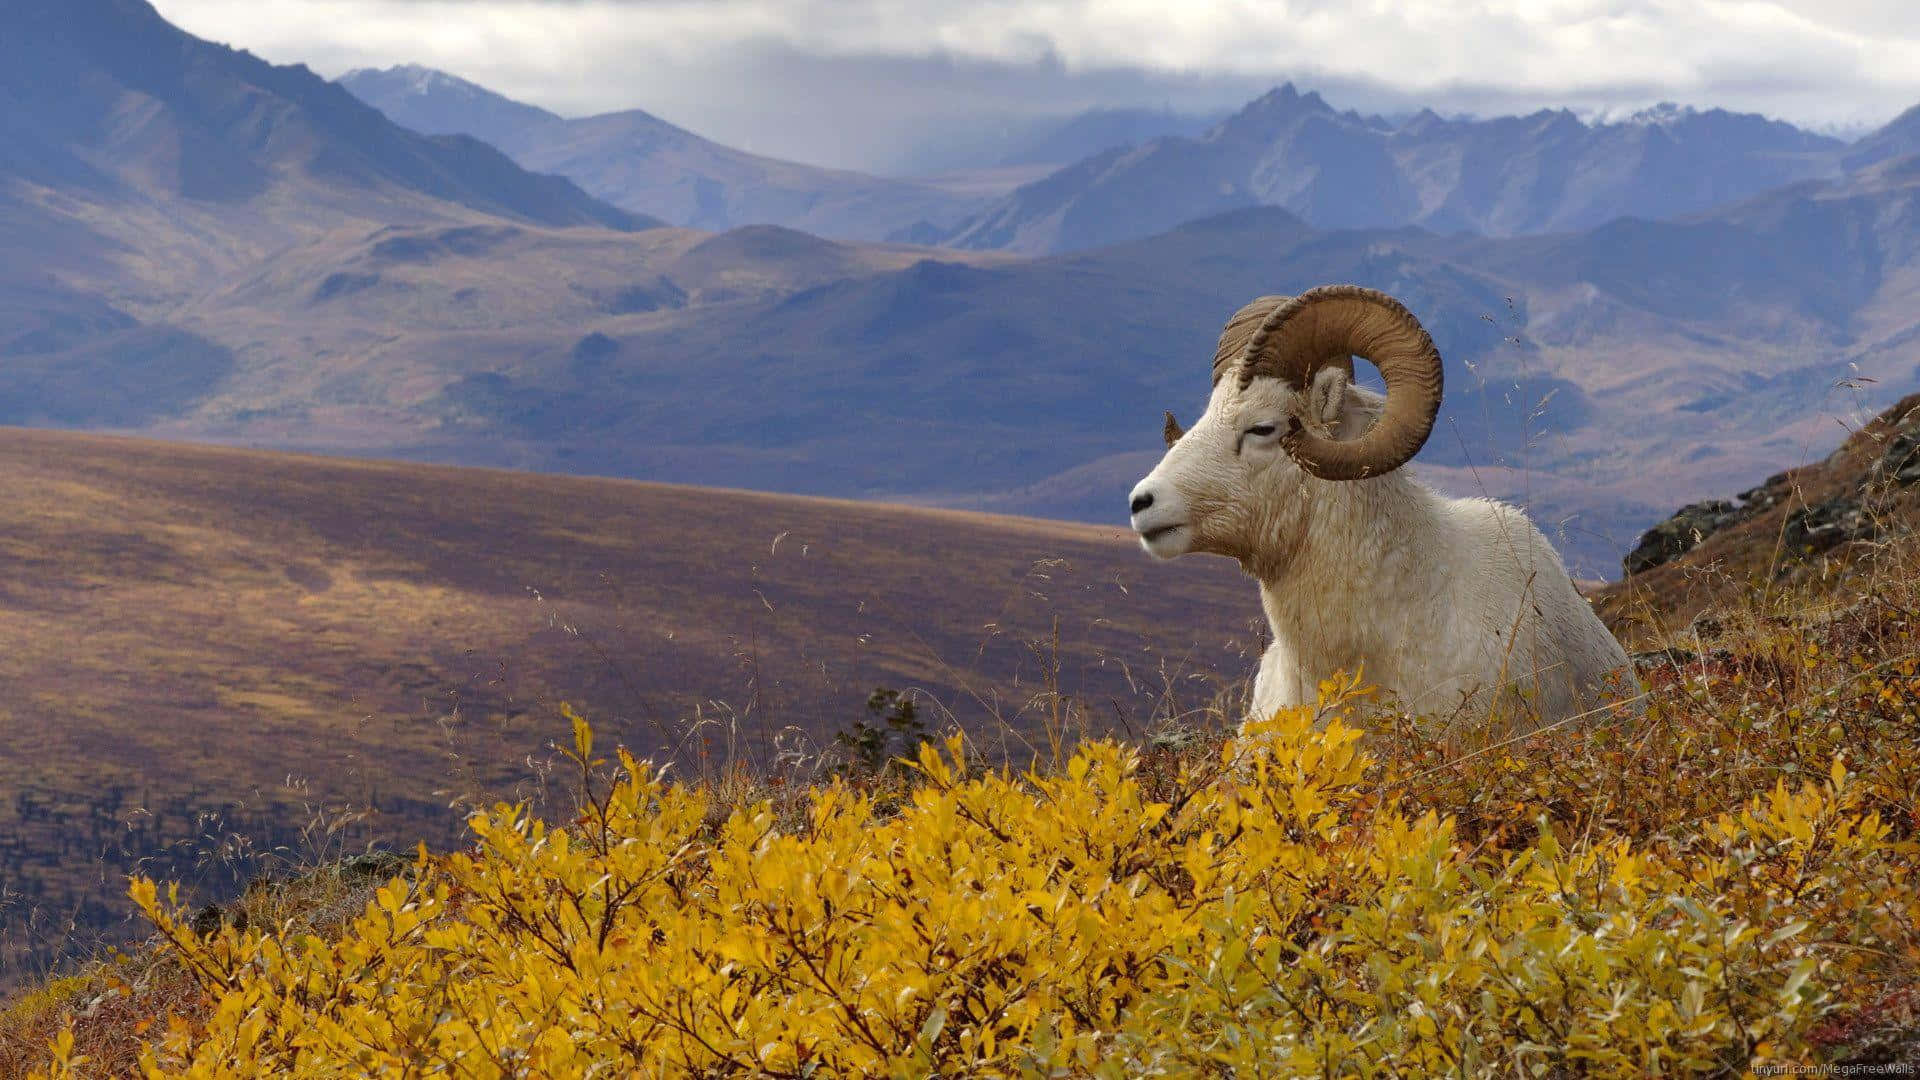 A Mountain Goat Surveying Its Surroundings